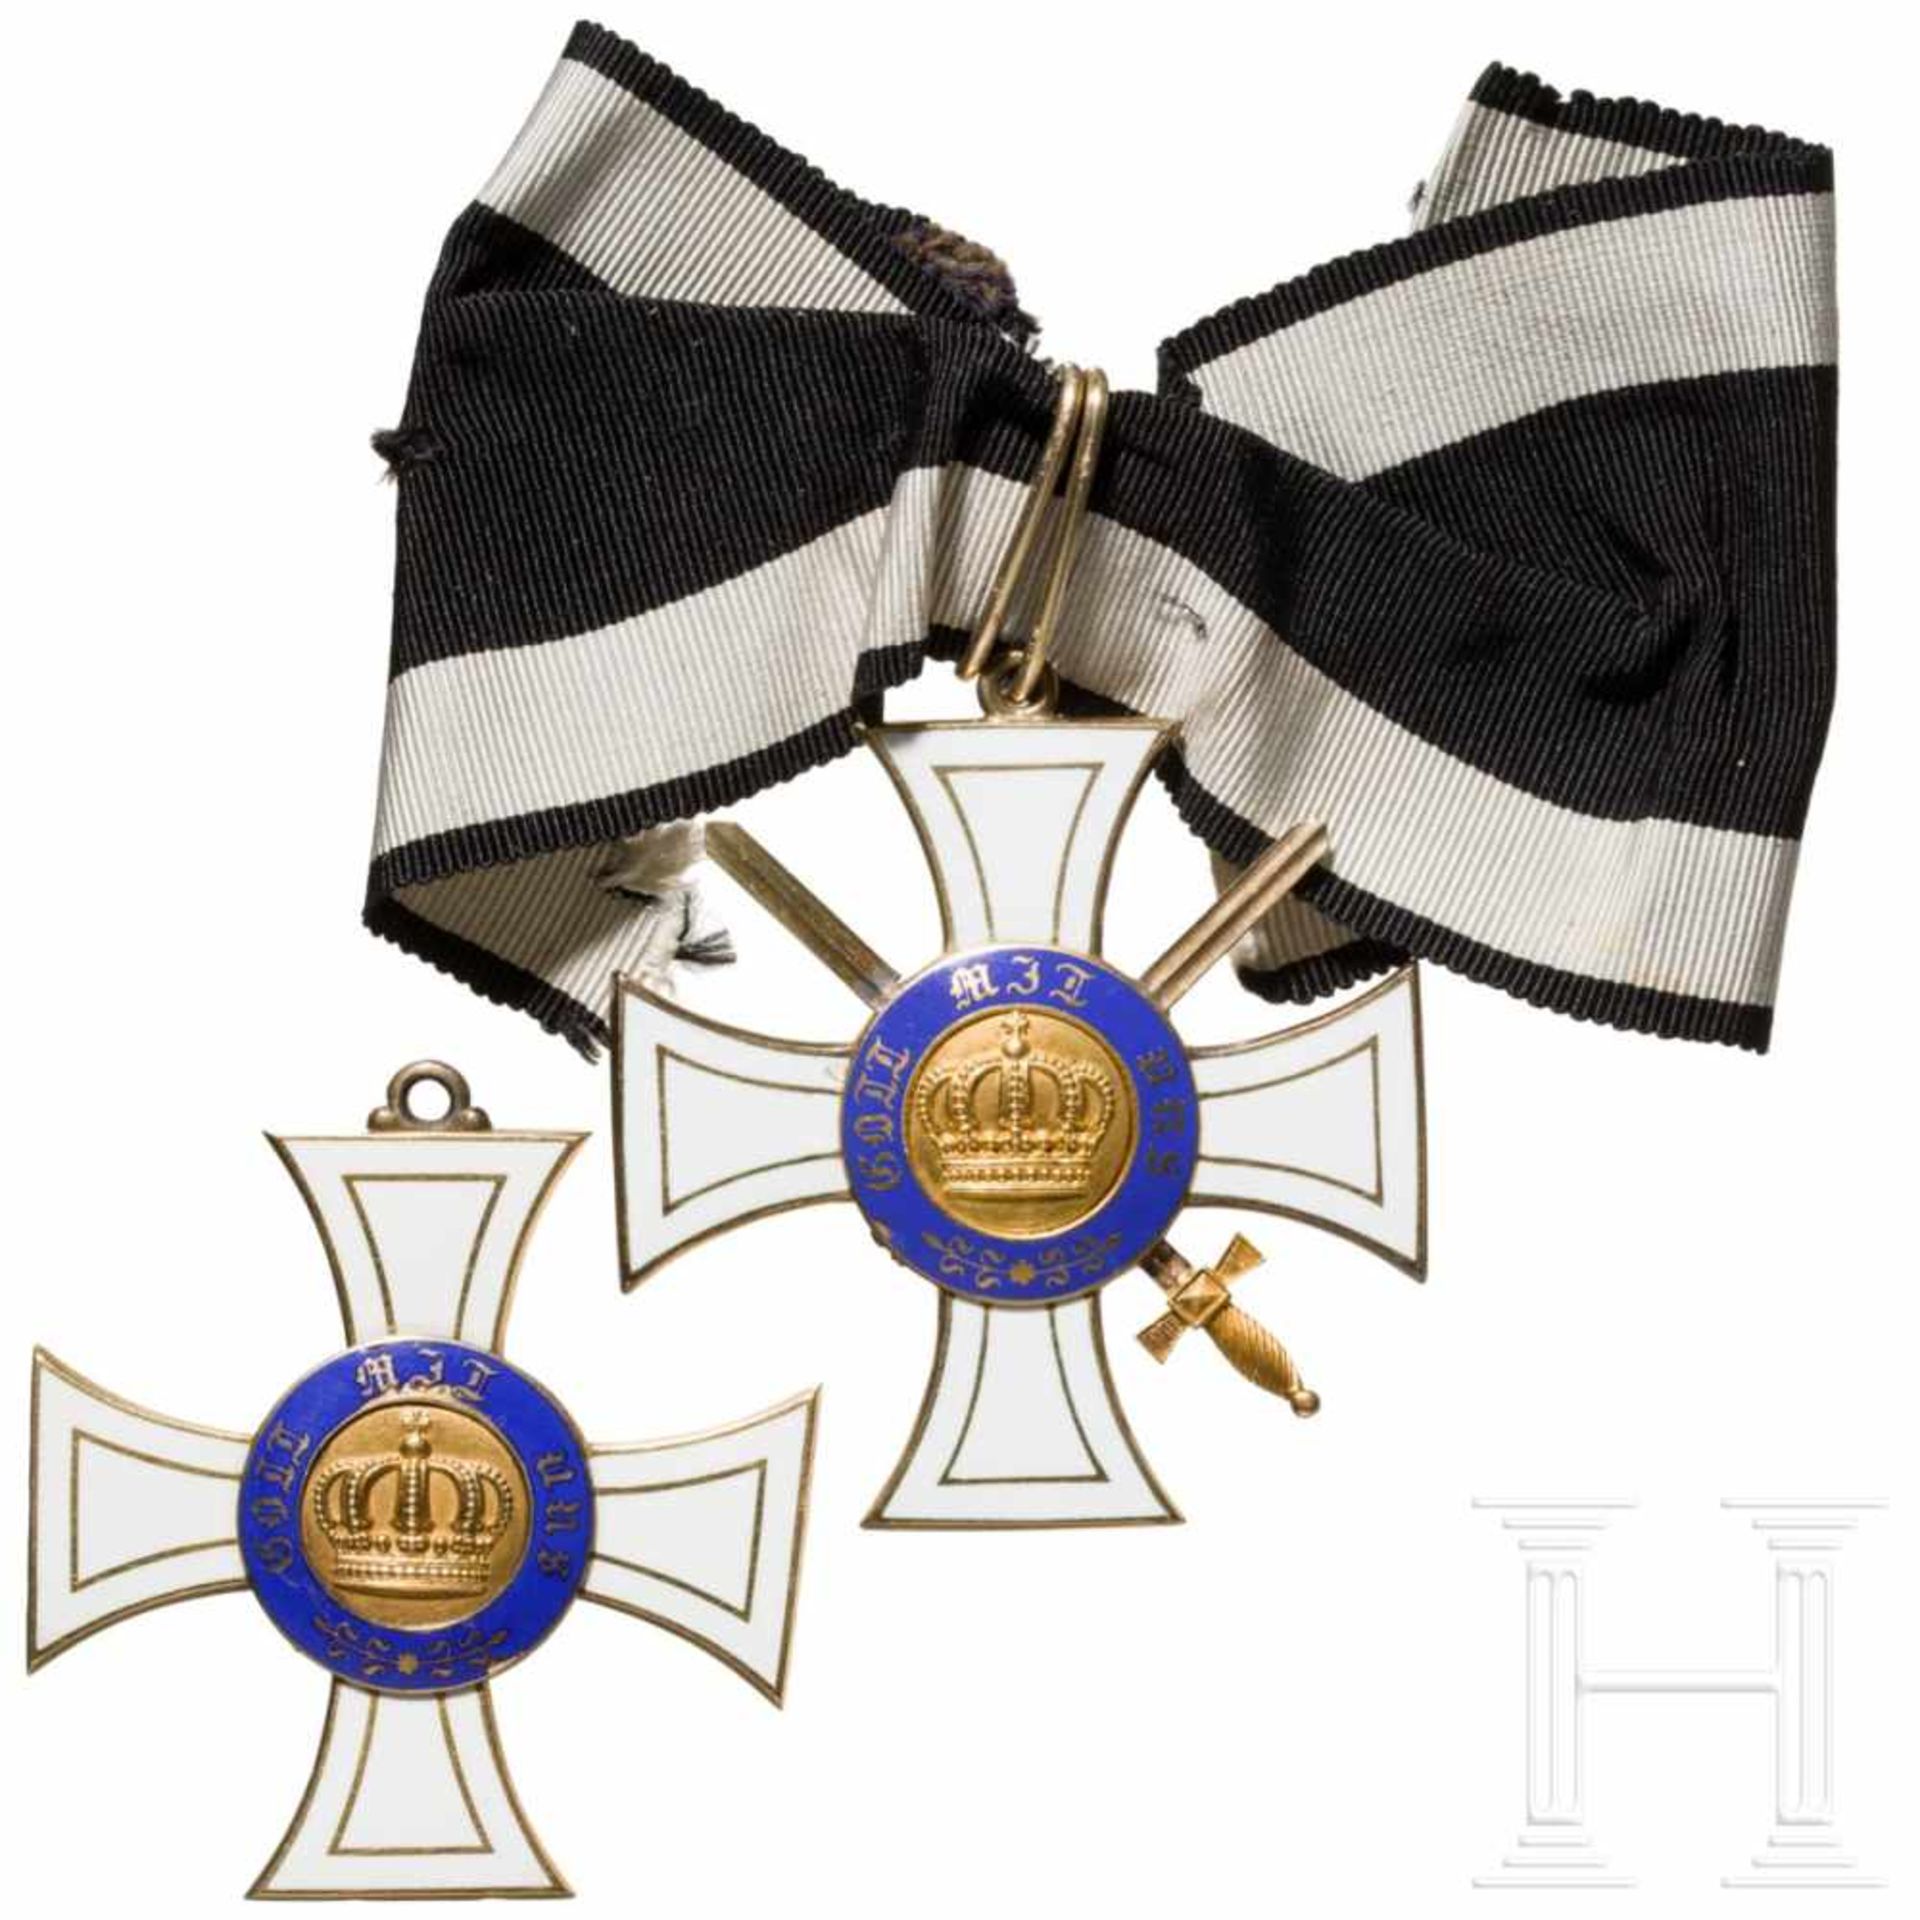 Two Orders of the Crown 2nd class, one with swordsKreuz 2. Klasse mit Schwertern, Silber